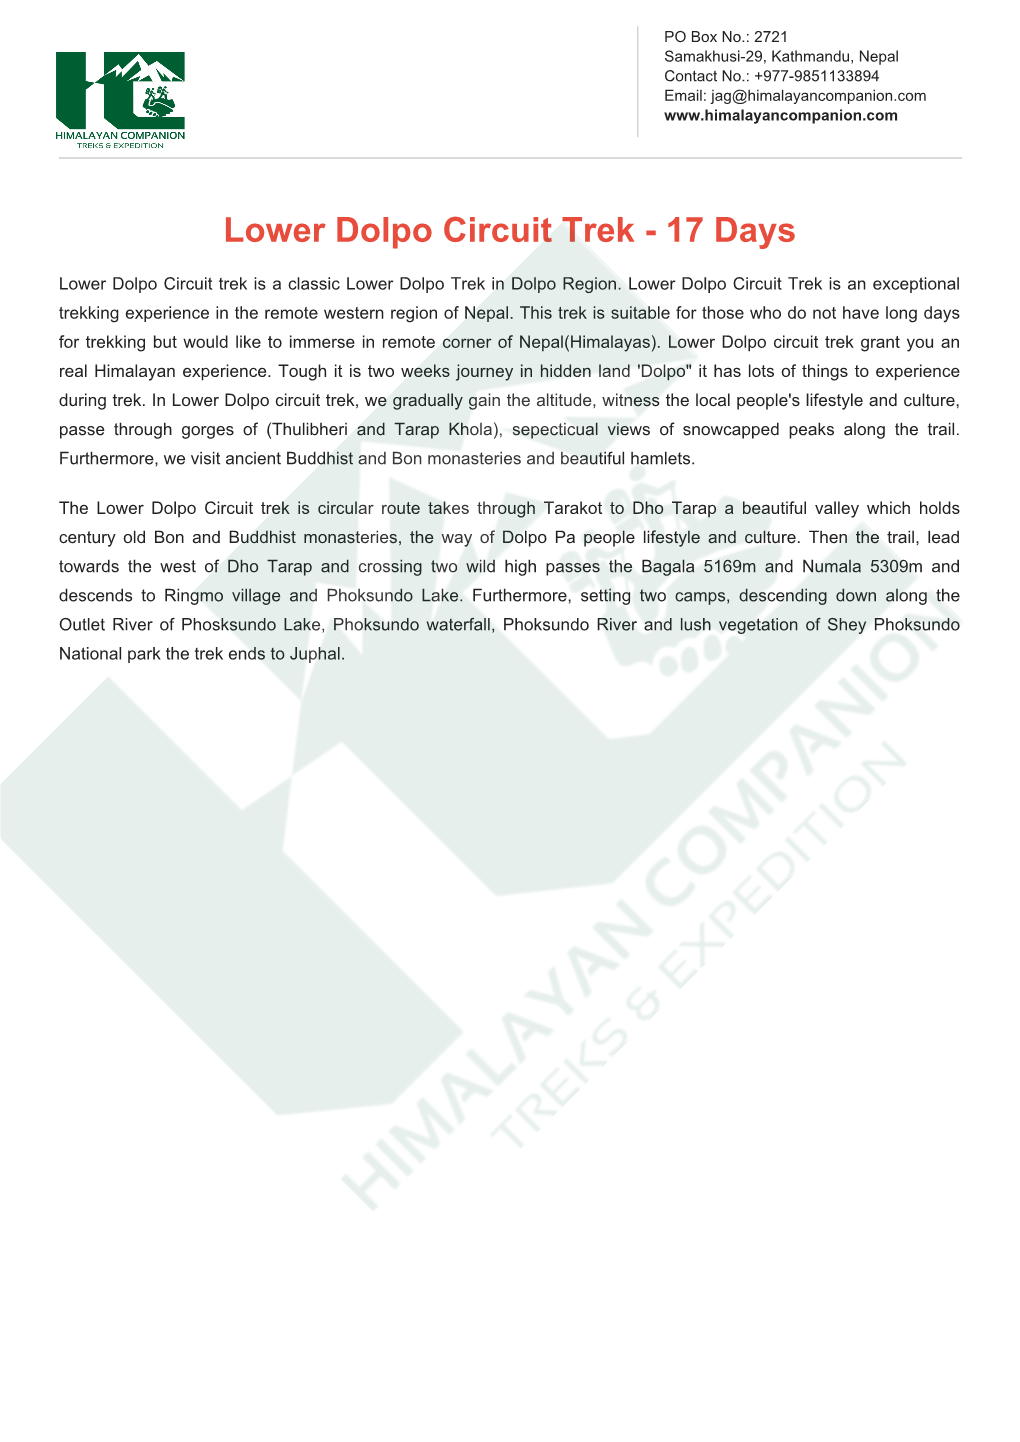 Lower Dolpo Circuit Trek - 17 Days